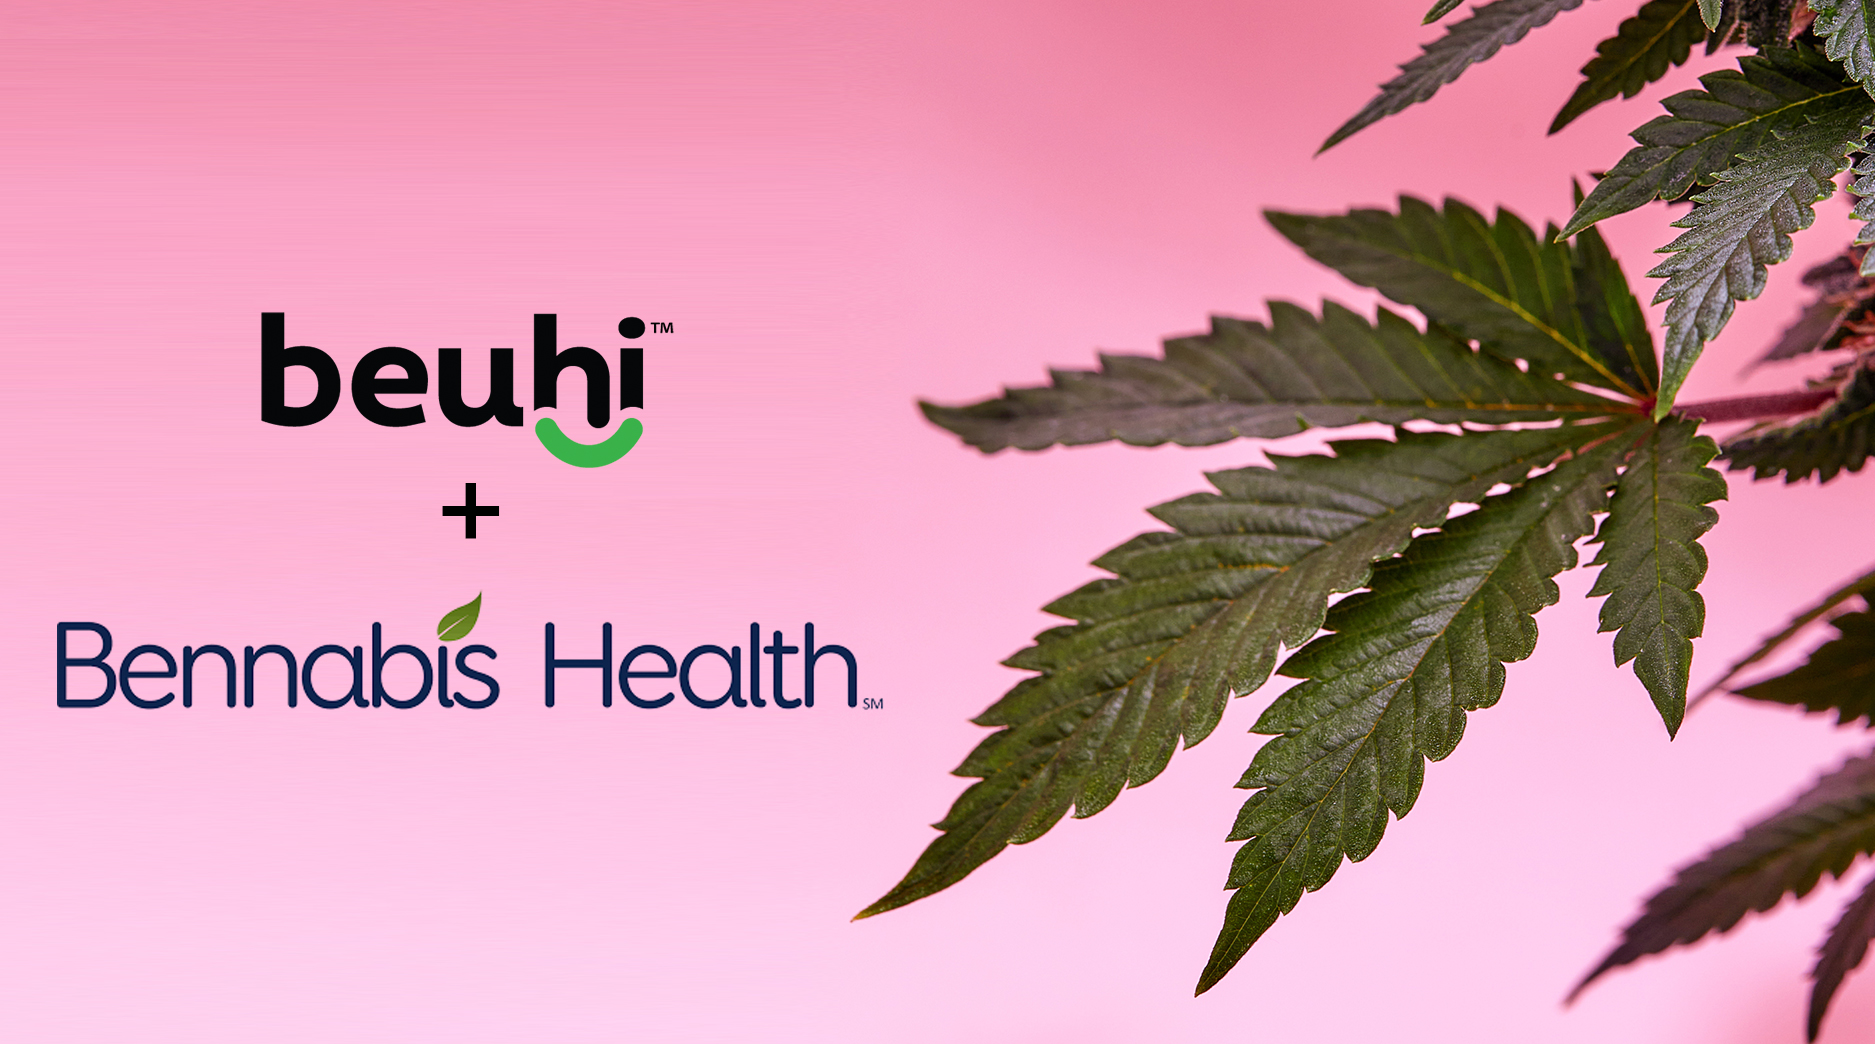 Beuhi, Inc. partners with Bennabis Health